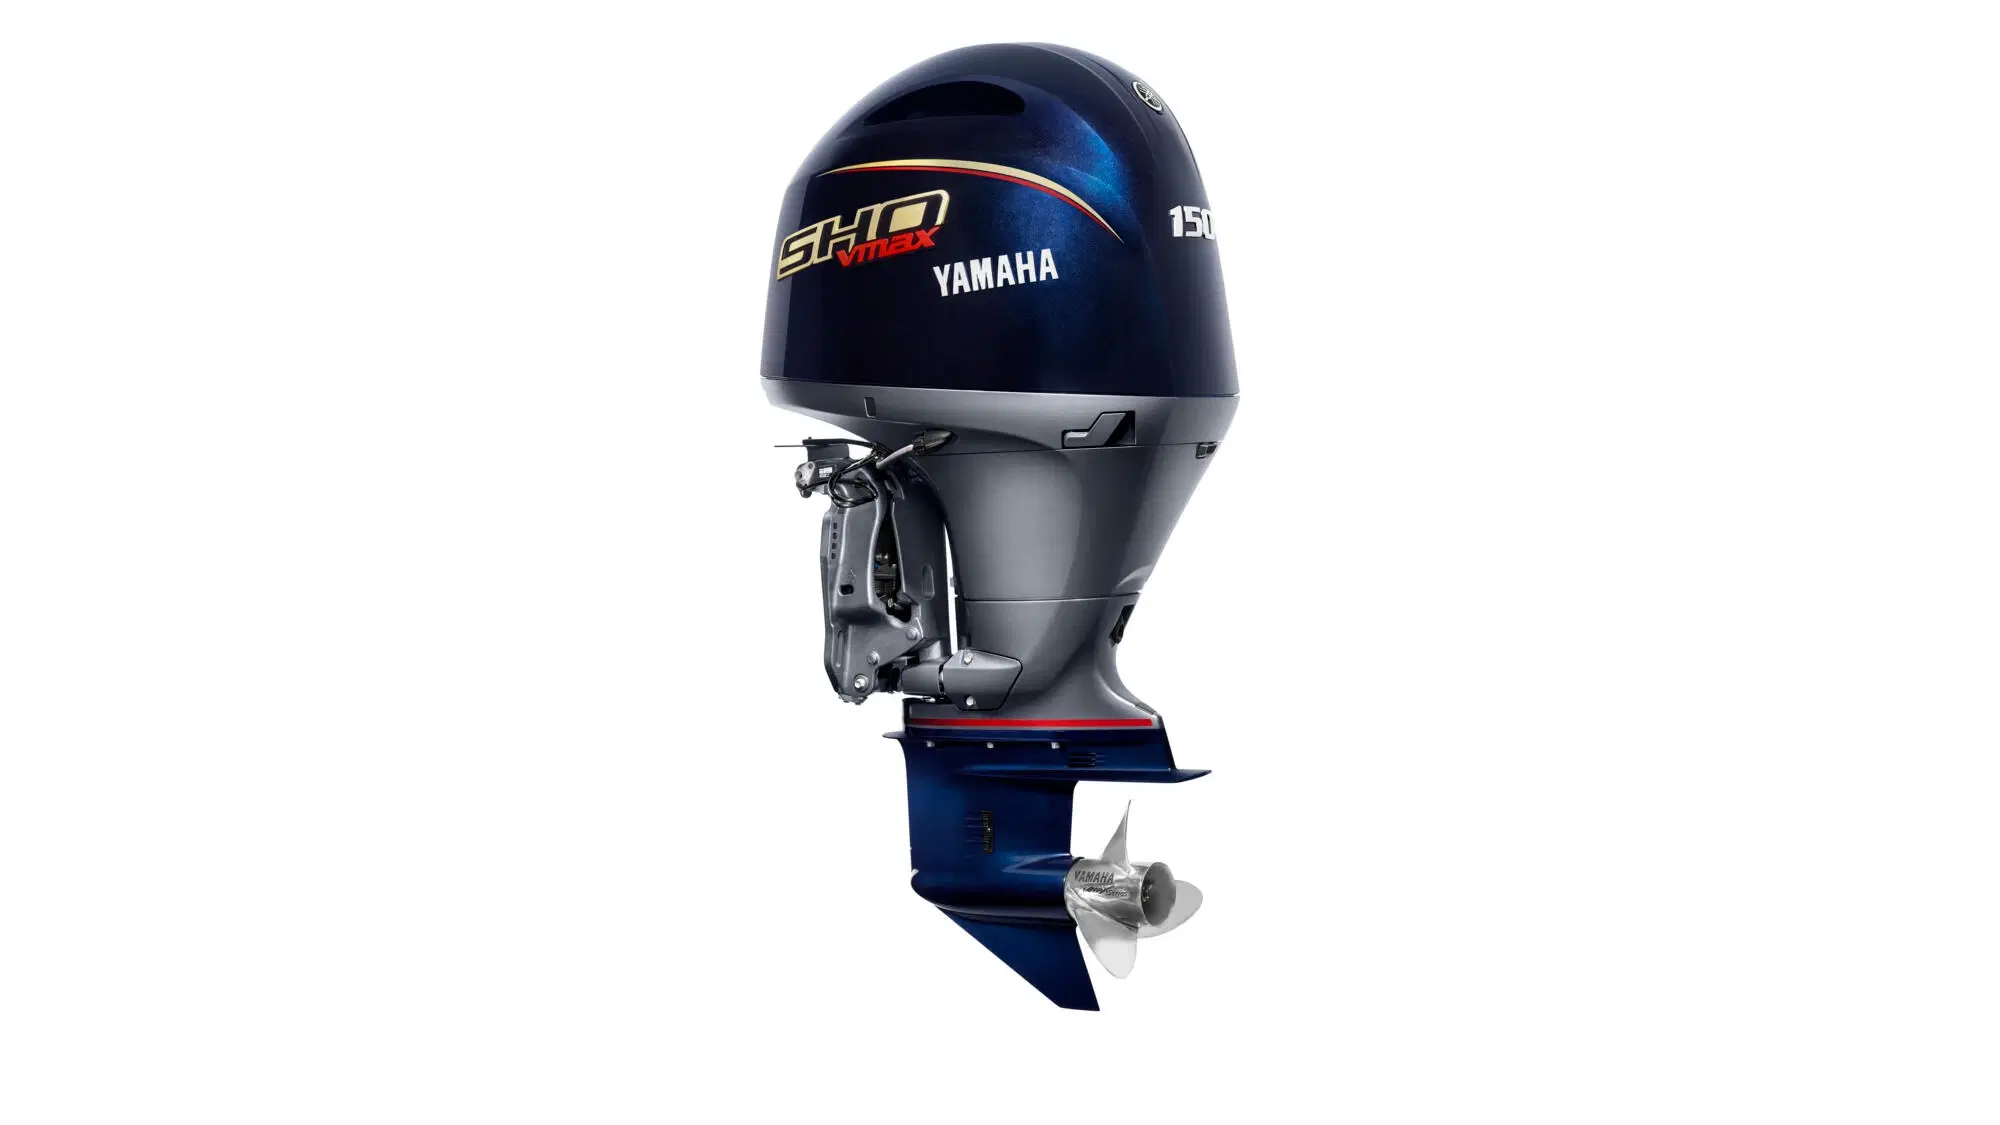 Yamaha VF150LA SHO Vmax